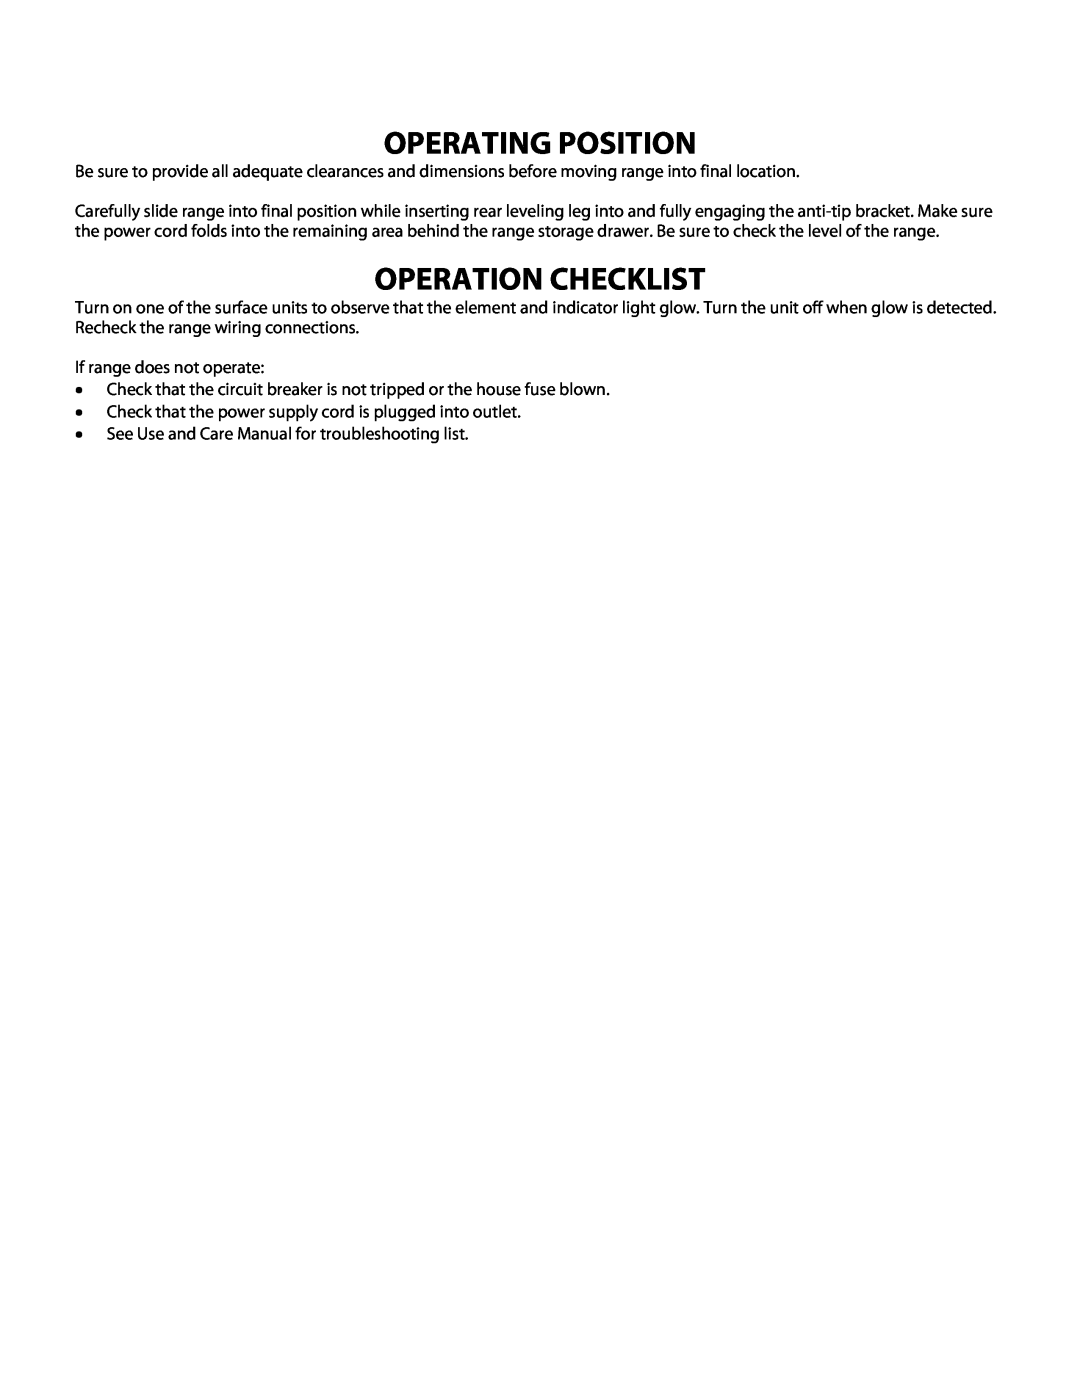 Danby DER2009W installation instructions Operating Position, Operation Checklist 